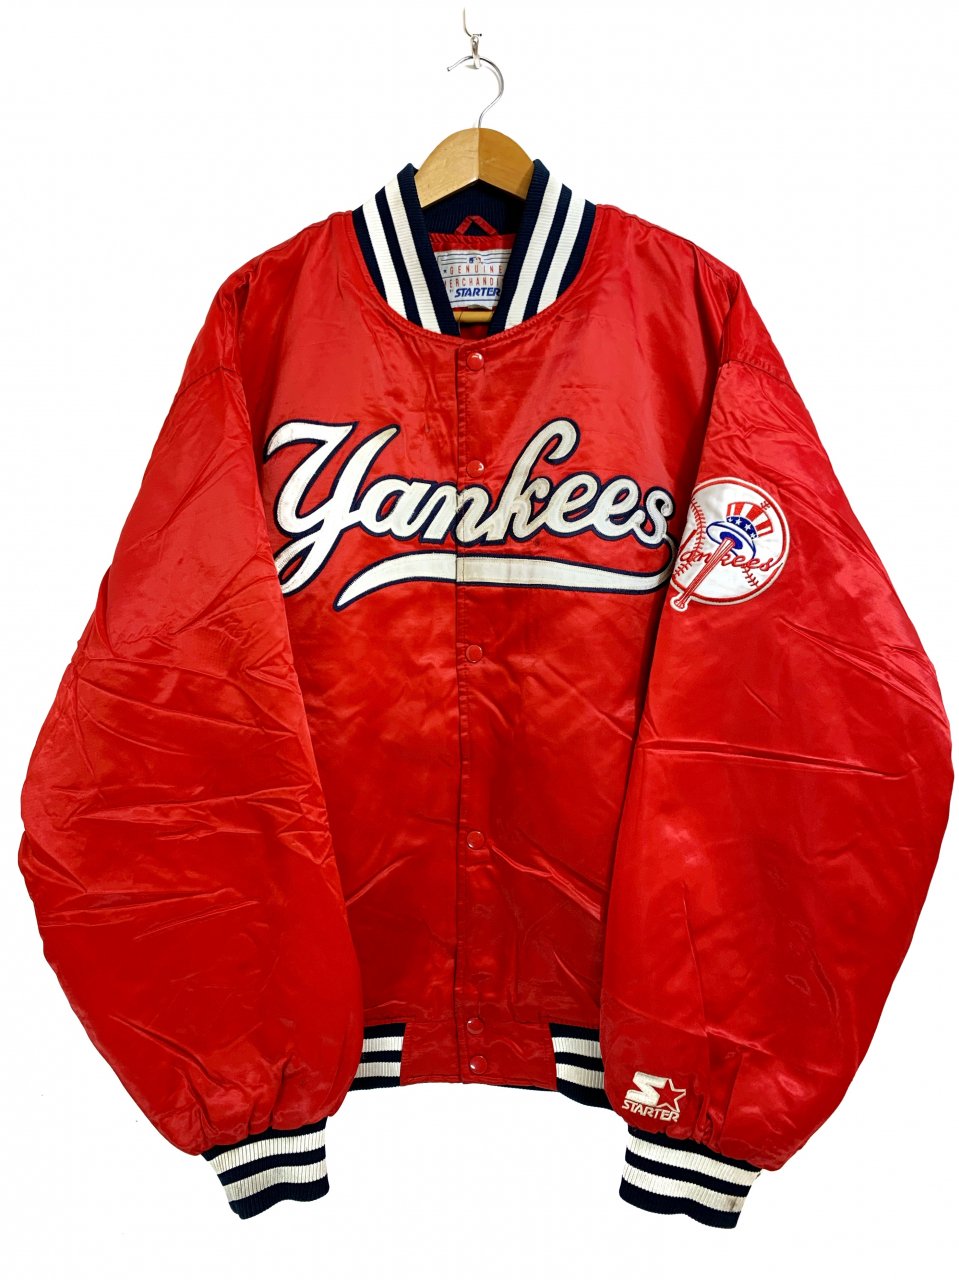 90s STARTER NEW YORK YANKEES スタジャン ヤンキース - rehda.com